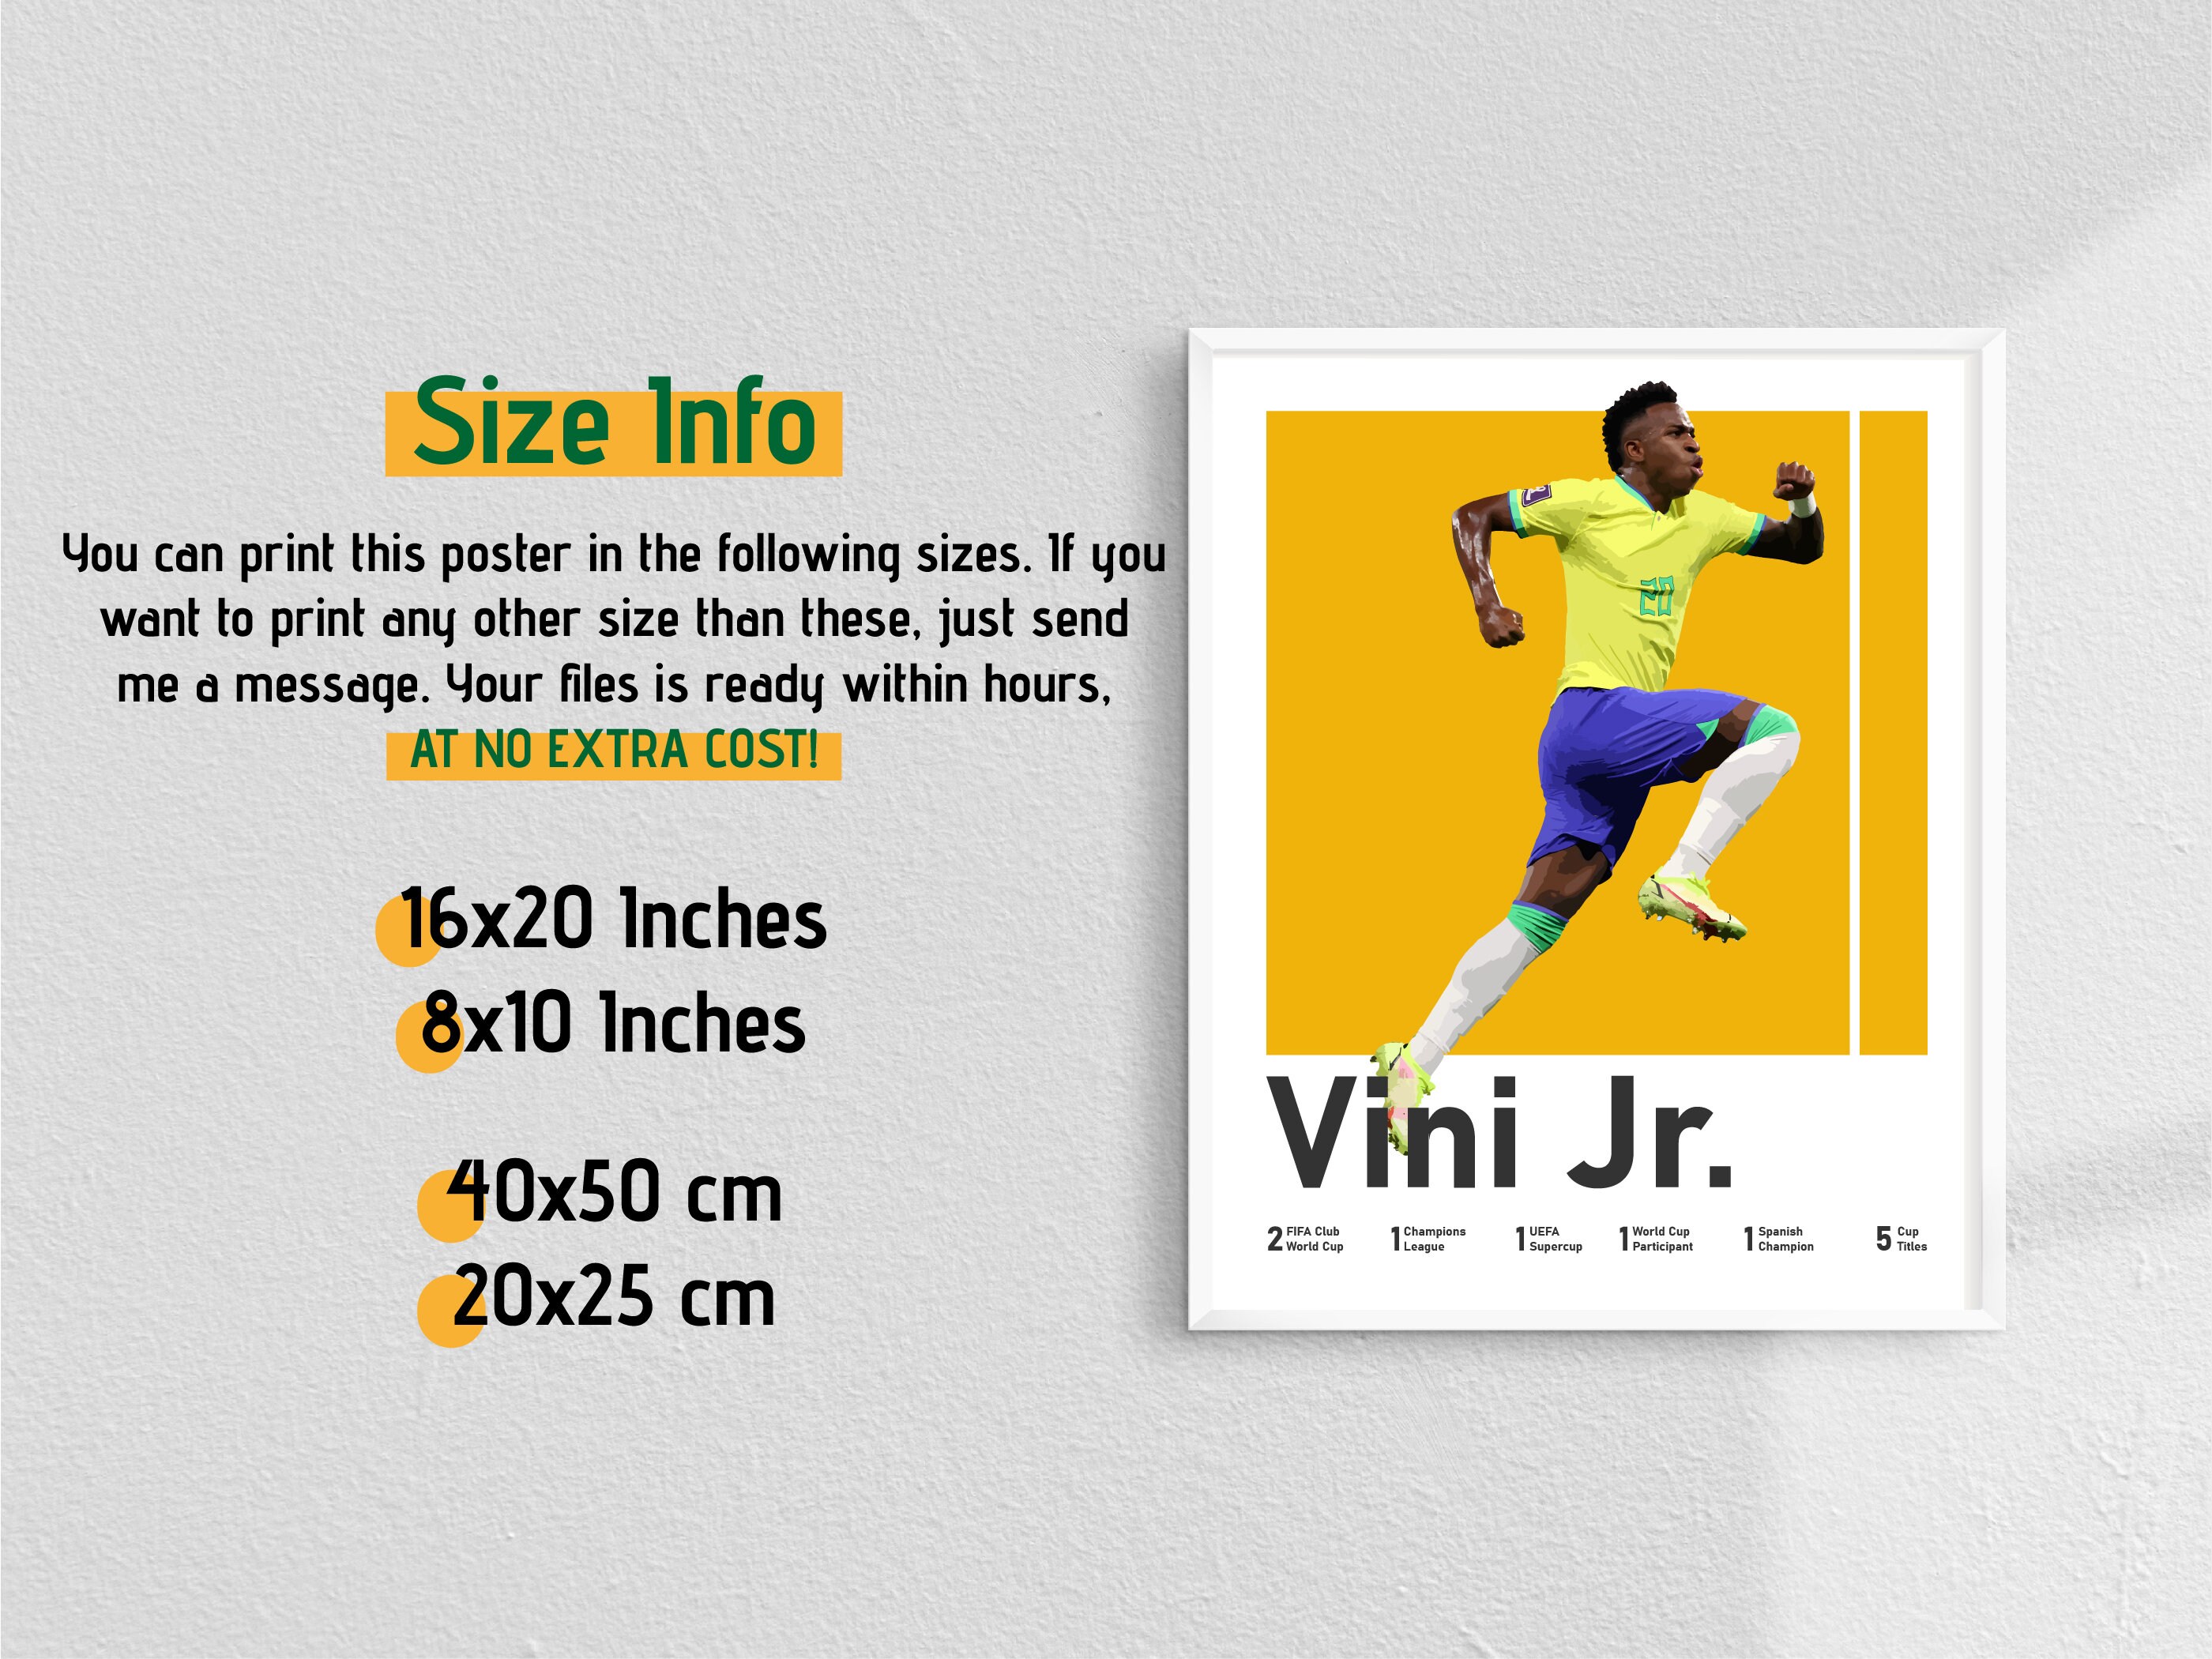 Discover Printable Vinicius Junior Poster, Brazilian Winger, Soccer Print, Vini Jr Wall Art, Teenager Room Decorations, Unframed